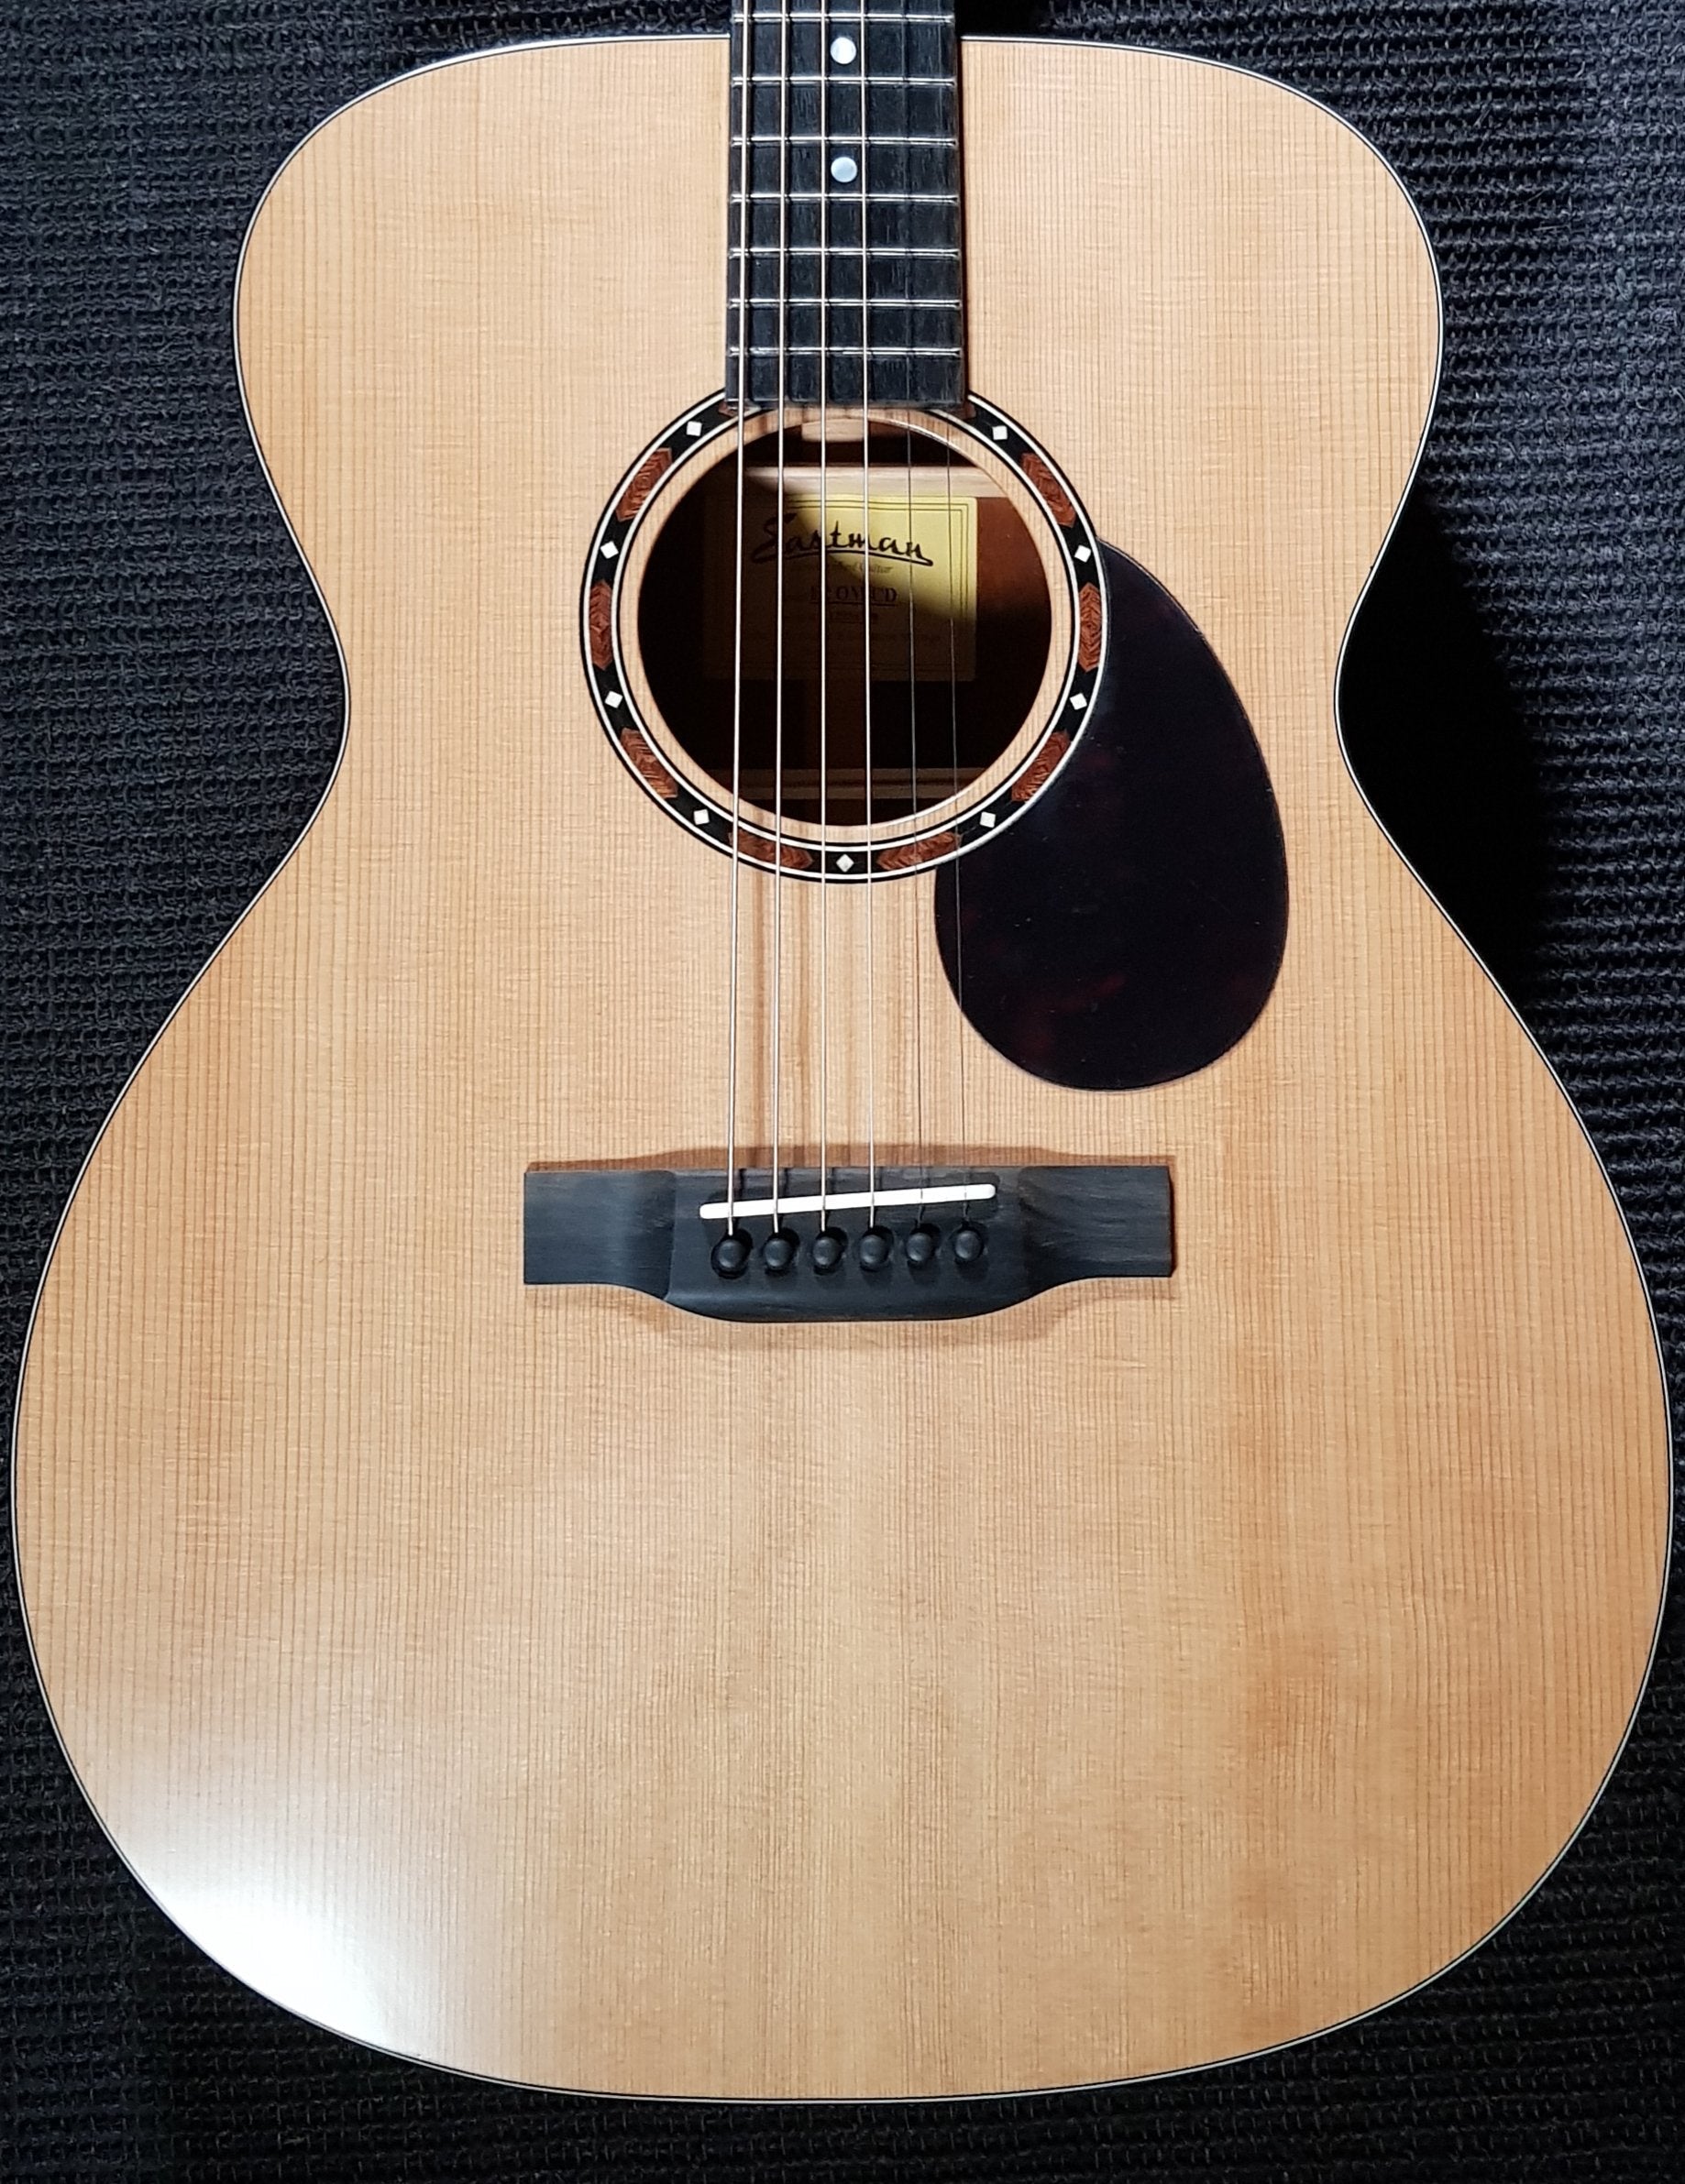 Eastman E2 OM CD Inc Premium Eastman Gig Bag, Acoustic Guitar for sale at Richards Guitars.